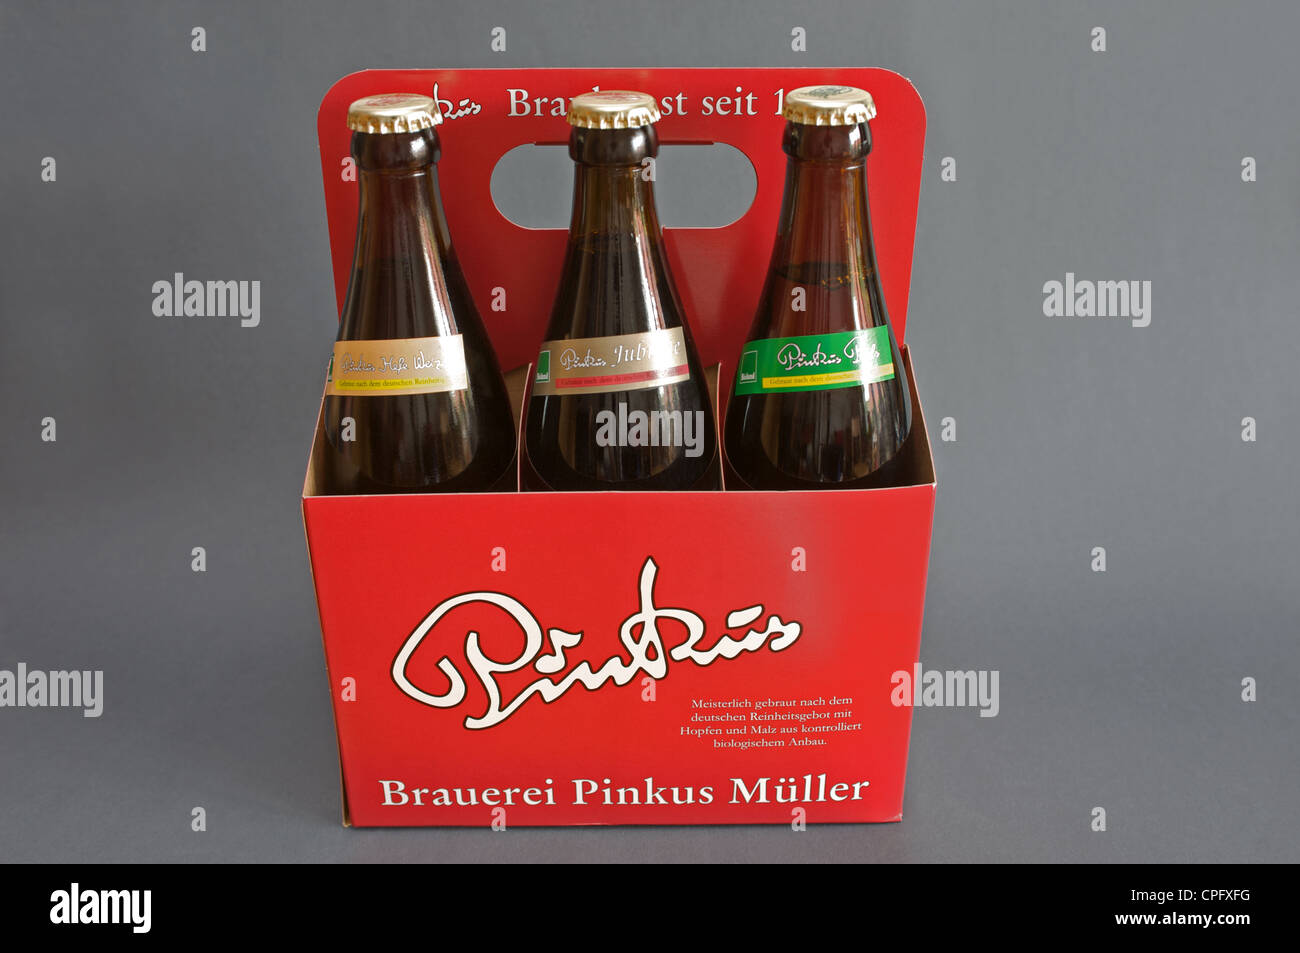 Pinkus Muller beer Stock Photo: 48293268 - Alamy